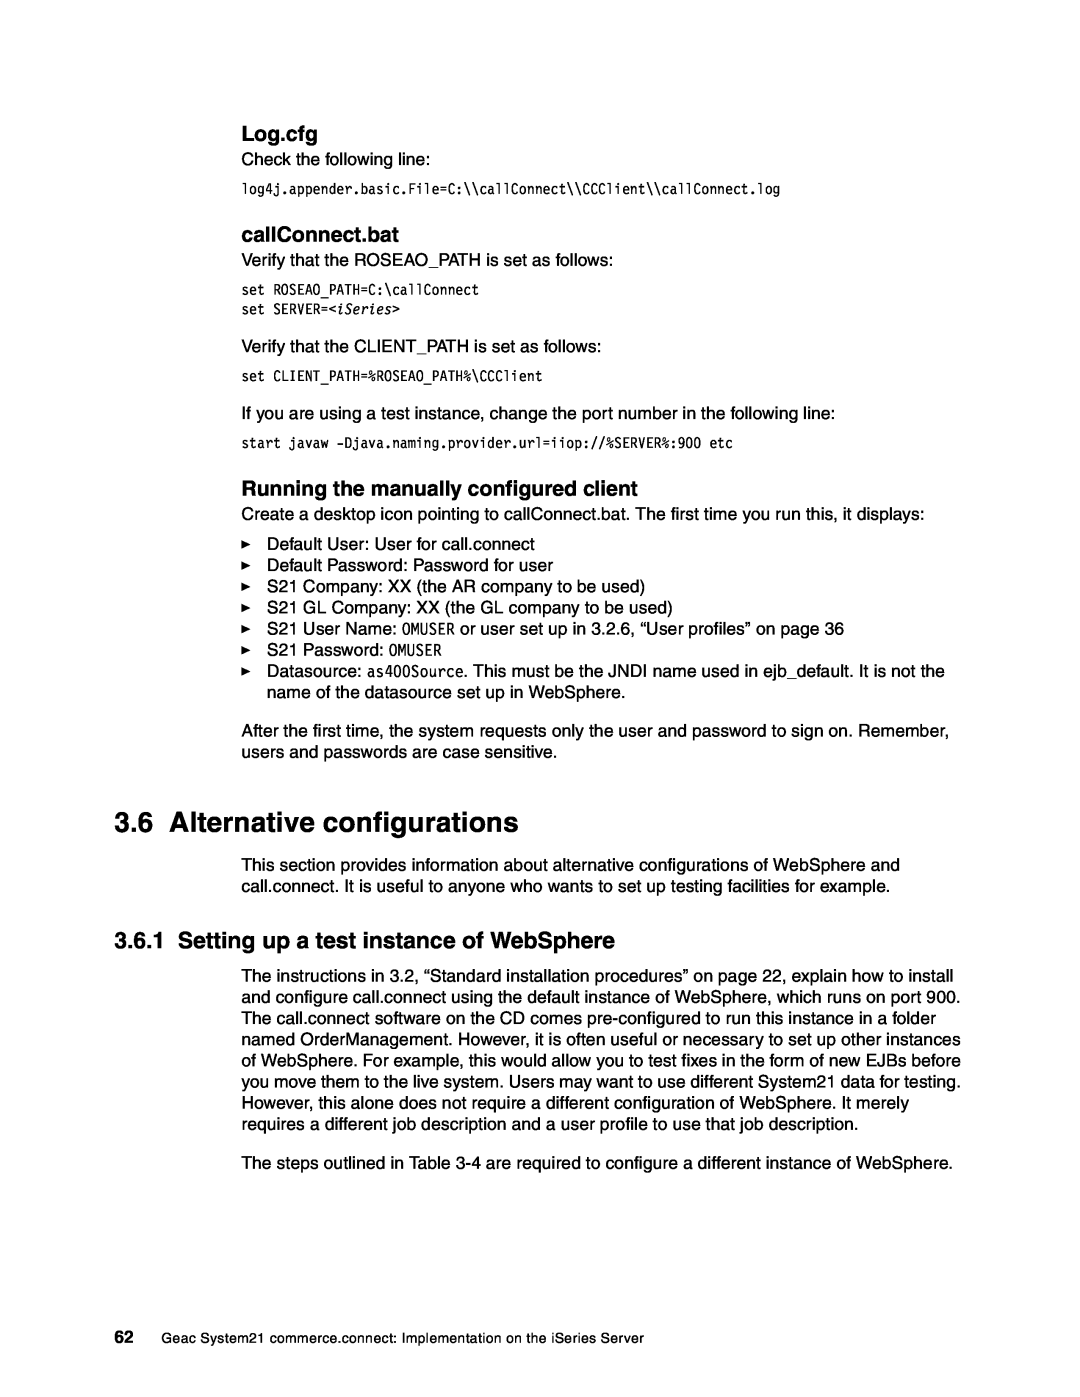 IBM SG24-6526-00 manual Alternative configurations, Setting up a test instance of WebSphere, Log.cfg, callConnect.bat 